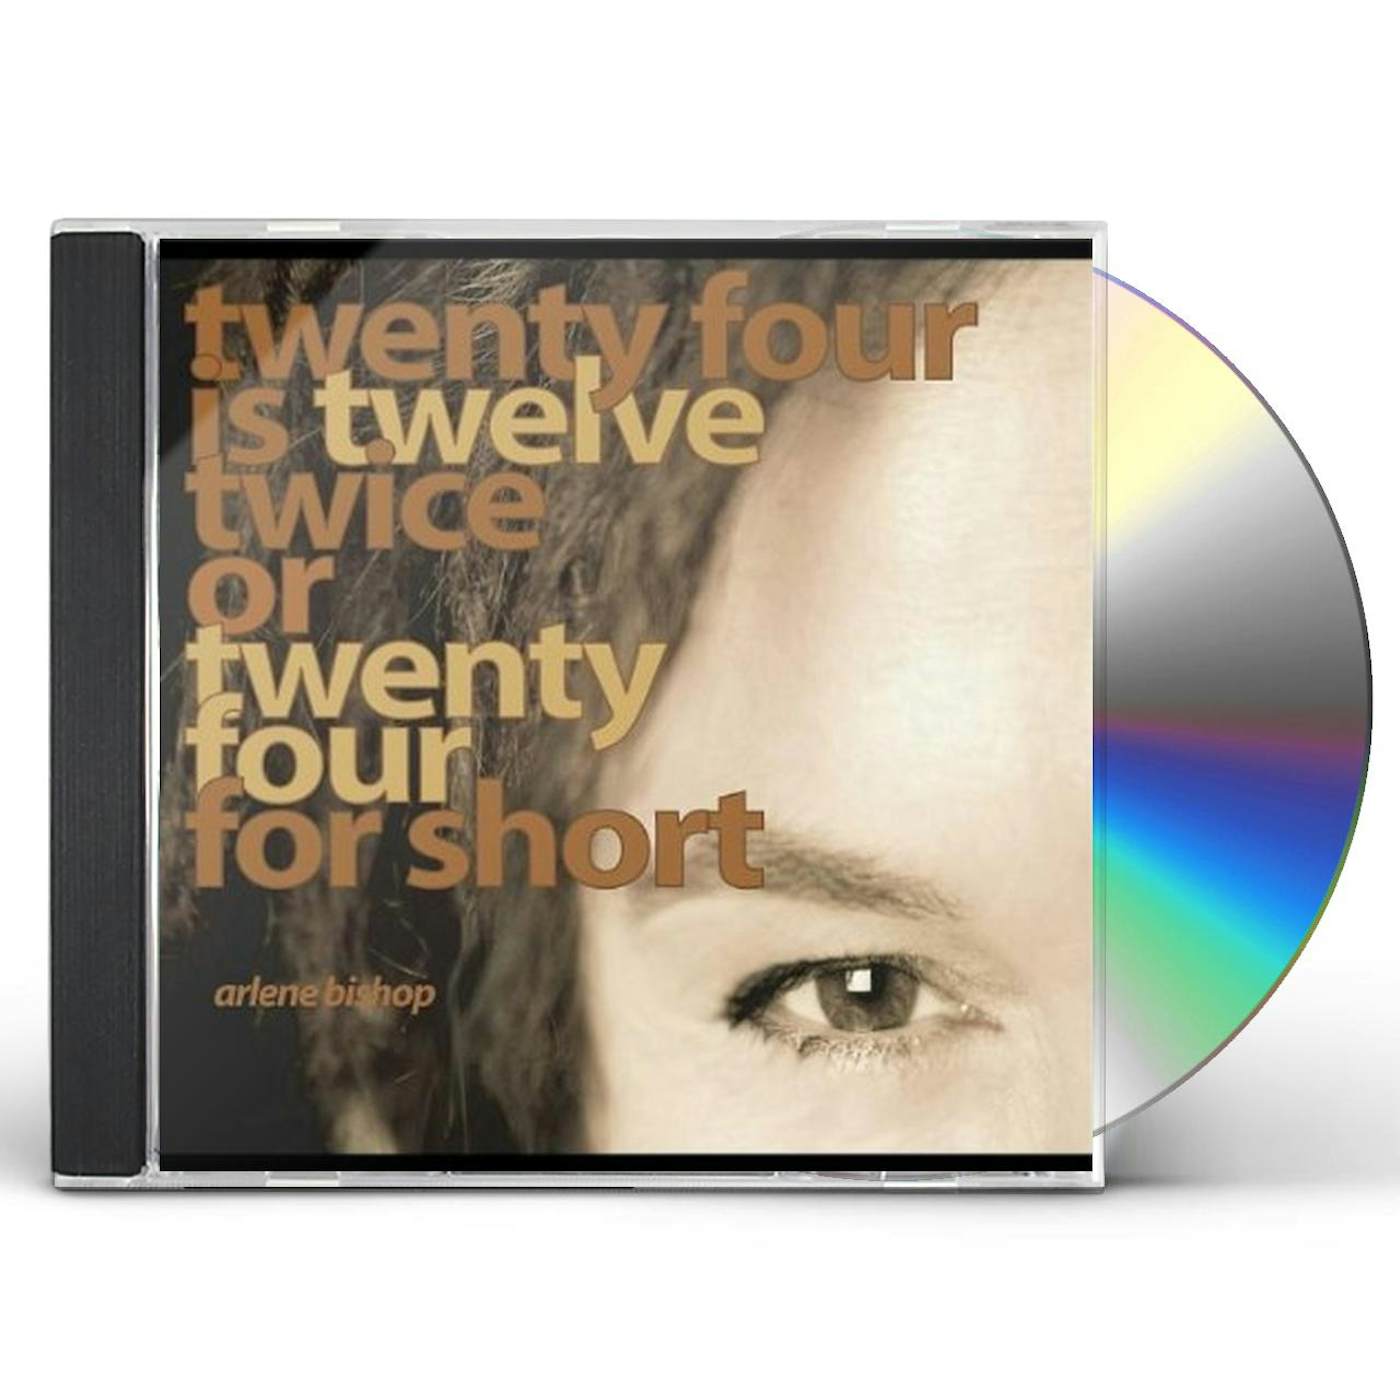 Arlene Bishop TWENTY FOUR IS TWELVE TWICE OR TWENTY FOUR FOR SHO CD